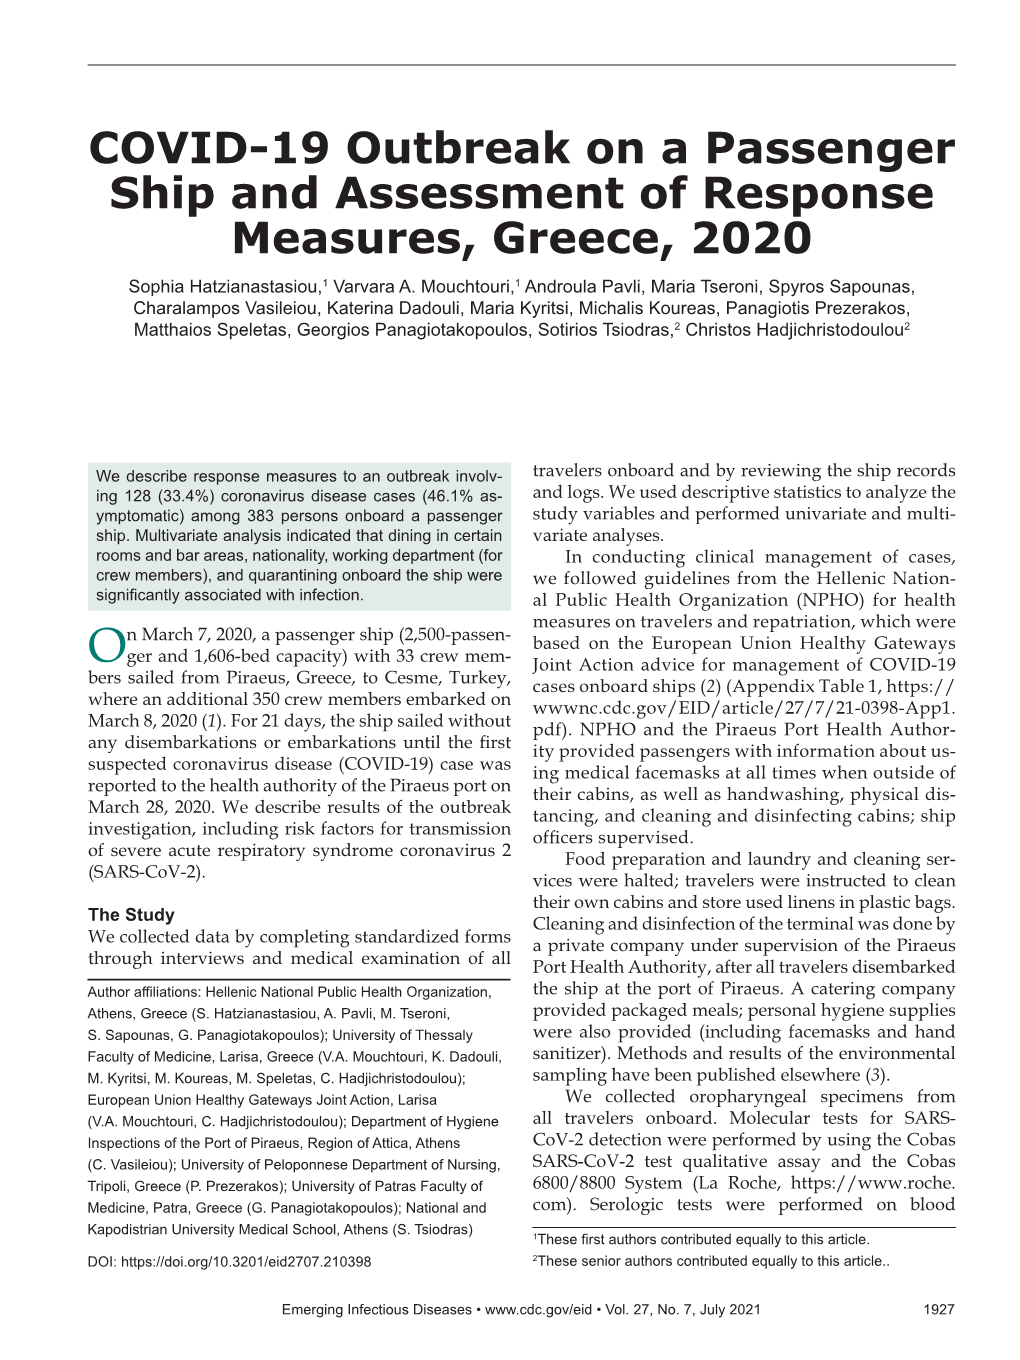 COVID-19 Outbreak on a Passenger Ship and Assessment of Response Measures, Greece, 2020 Sophia Hatzianastasiou,1 Varvara A